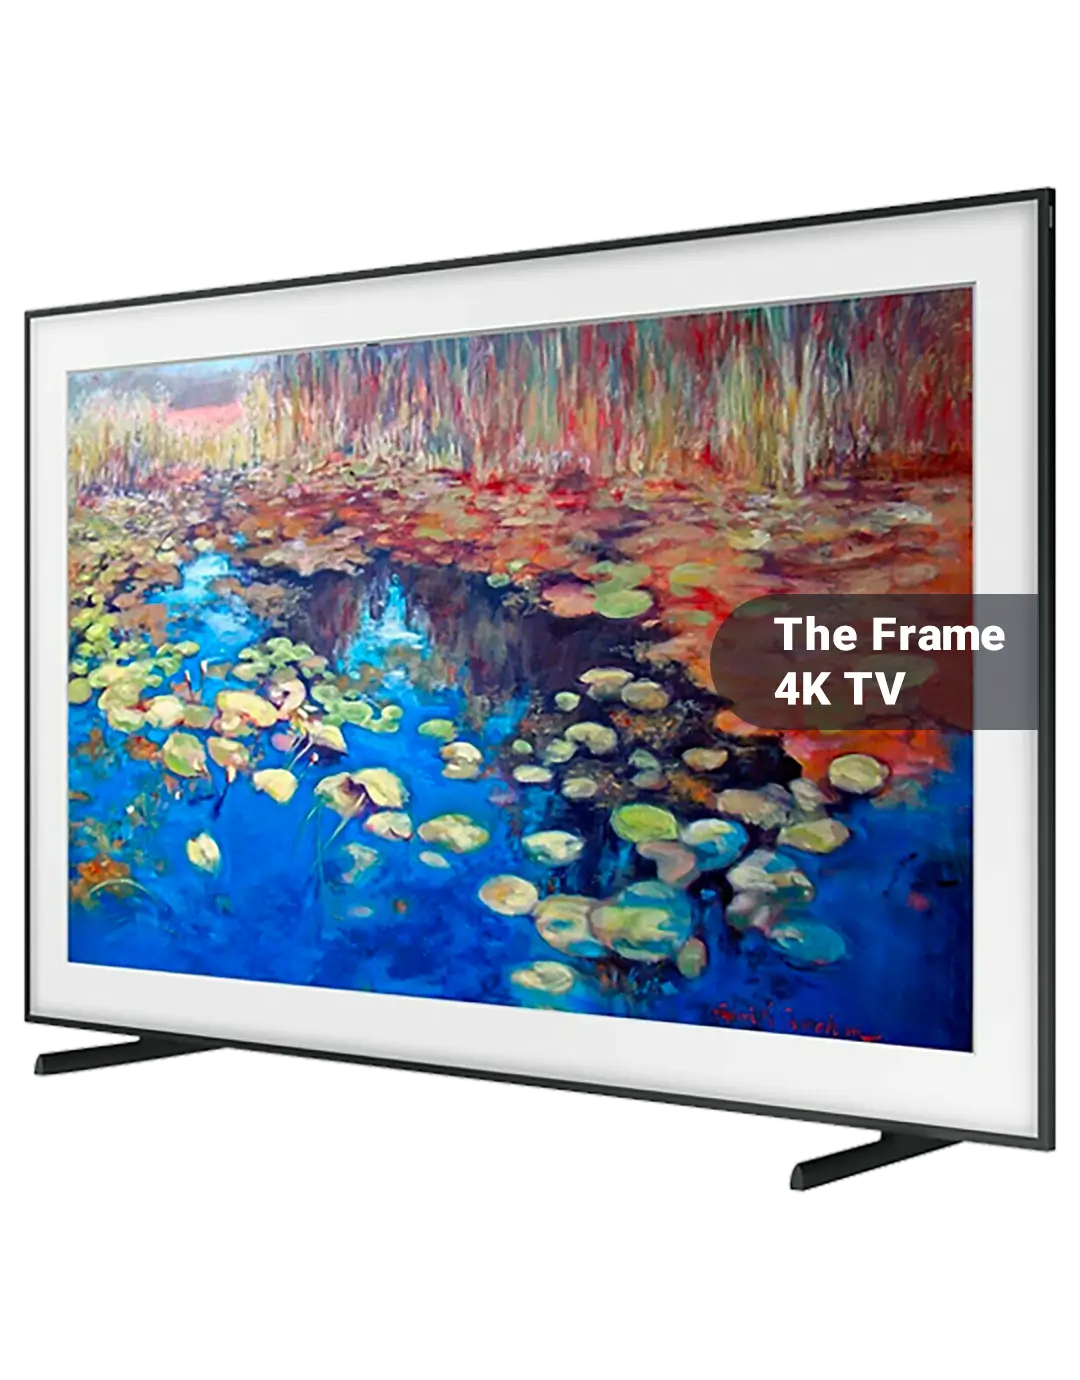 Samsung The Frame 4K TV